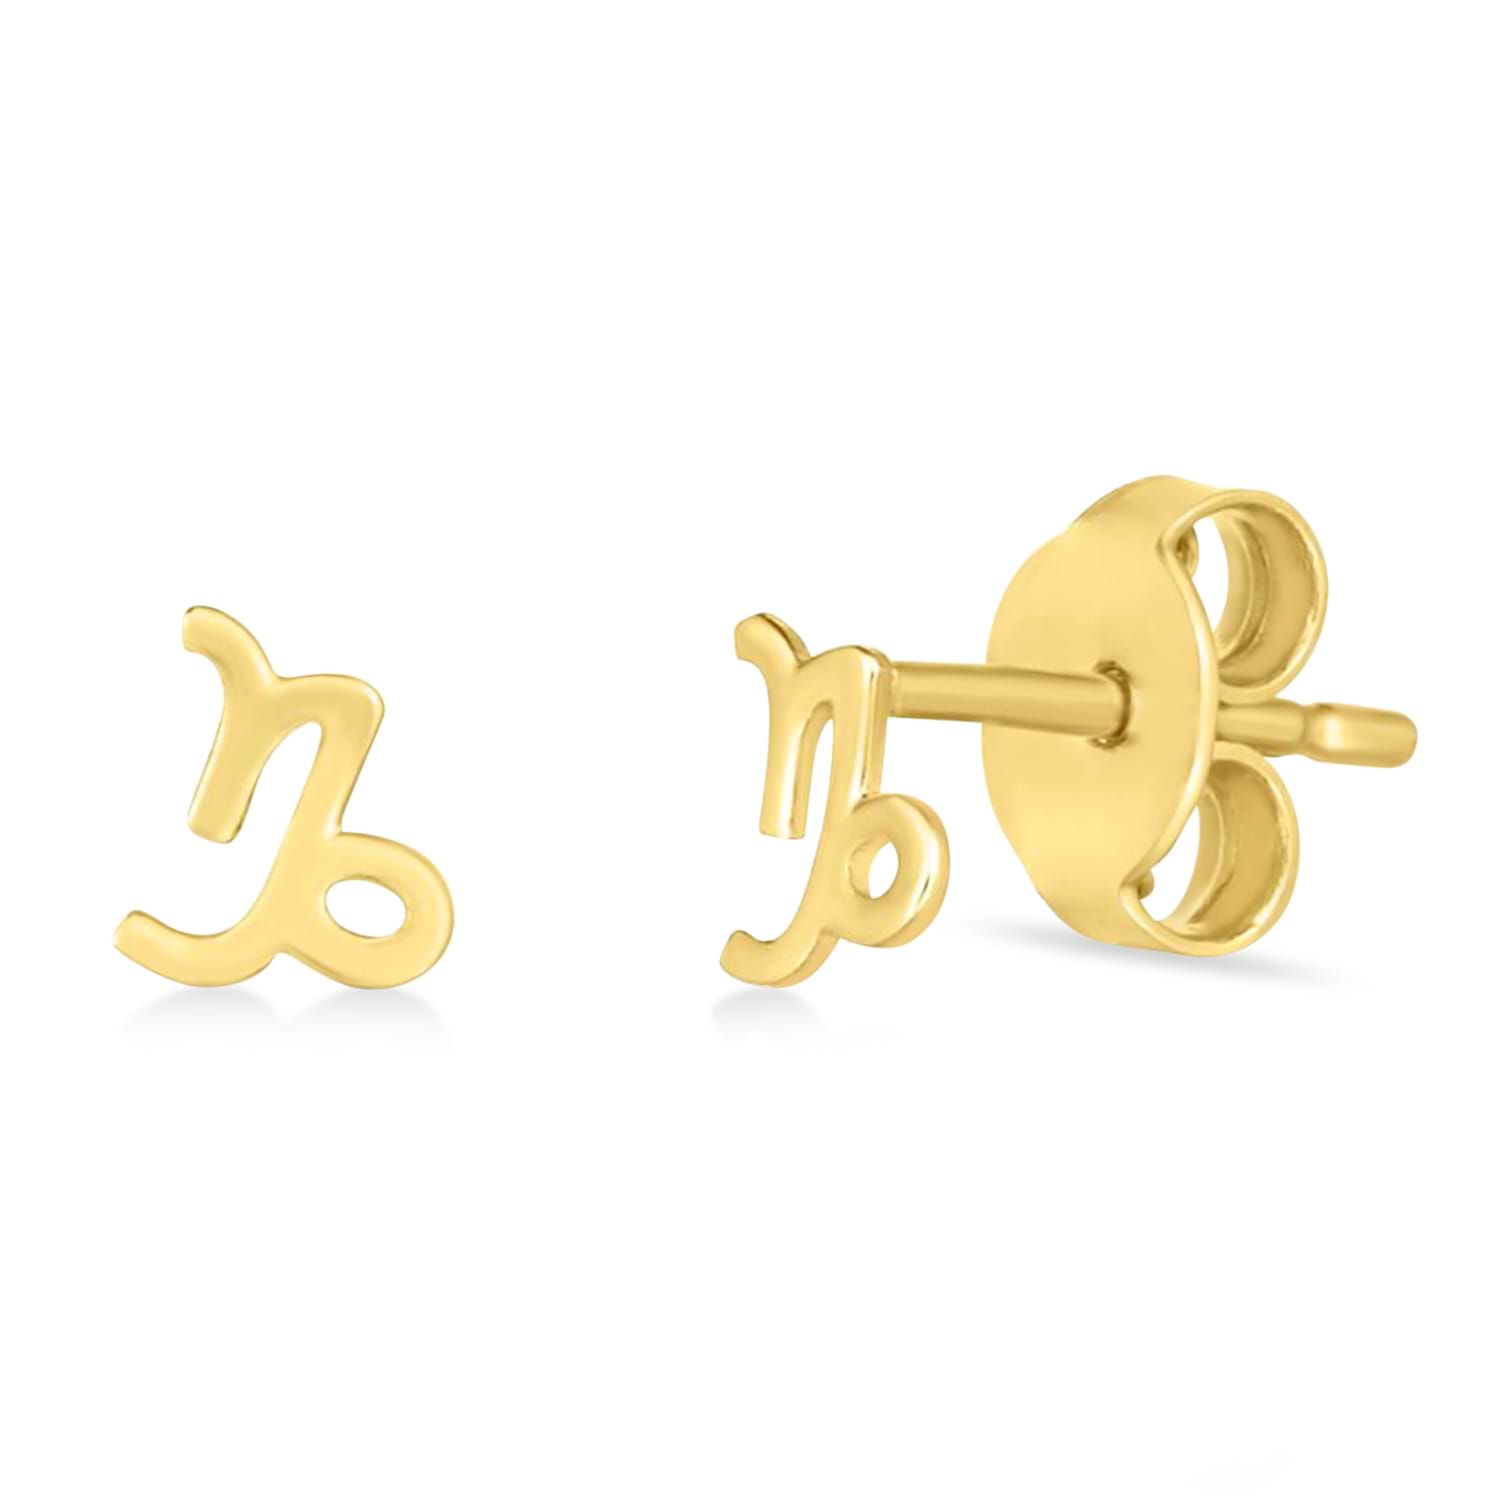 Capricorn Zodiac Stud Earrings 14K Yellow Gold